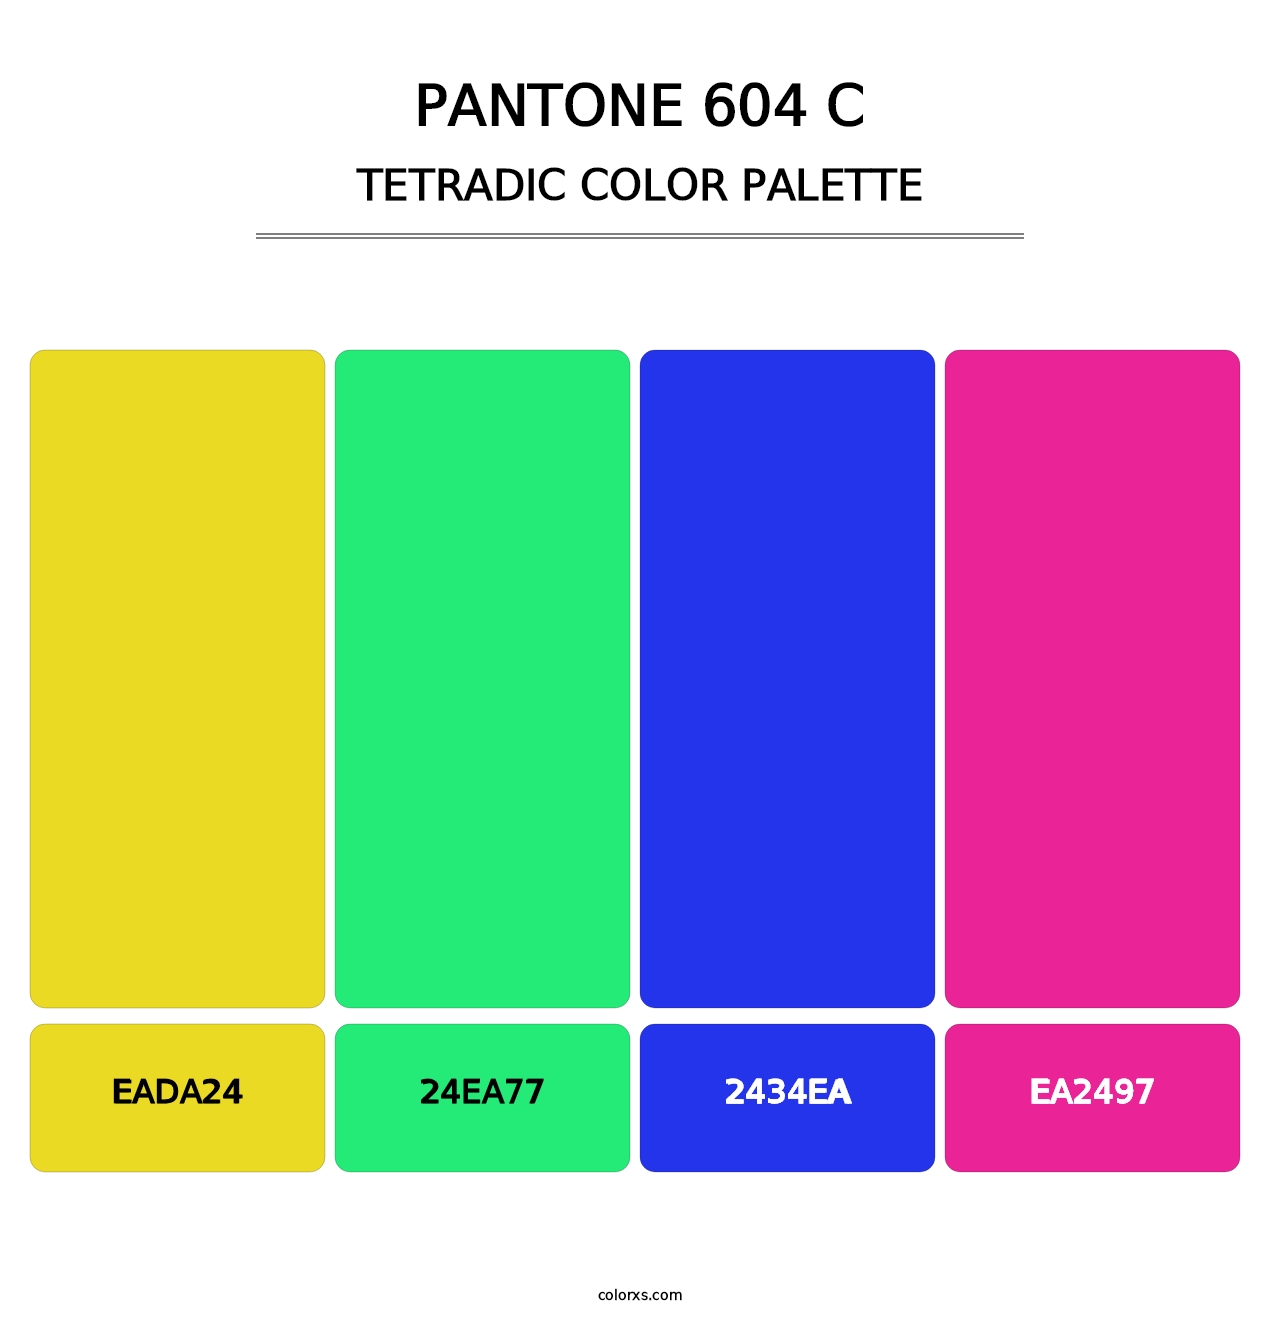 PANTONE 604 C - Tetradic Color Palette